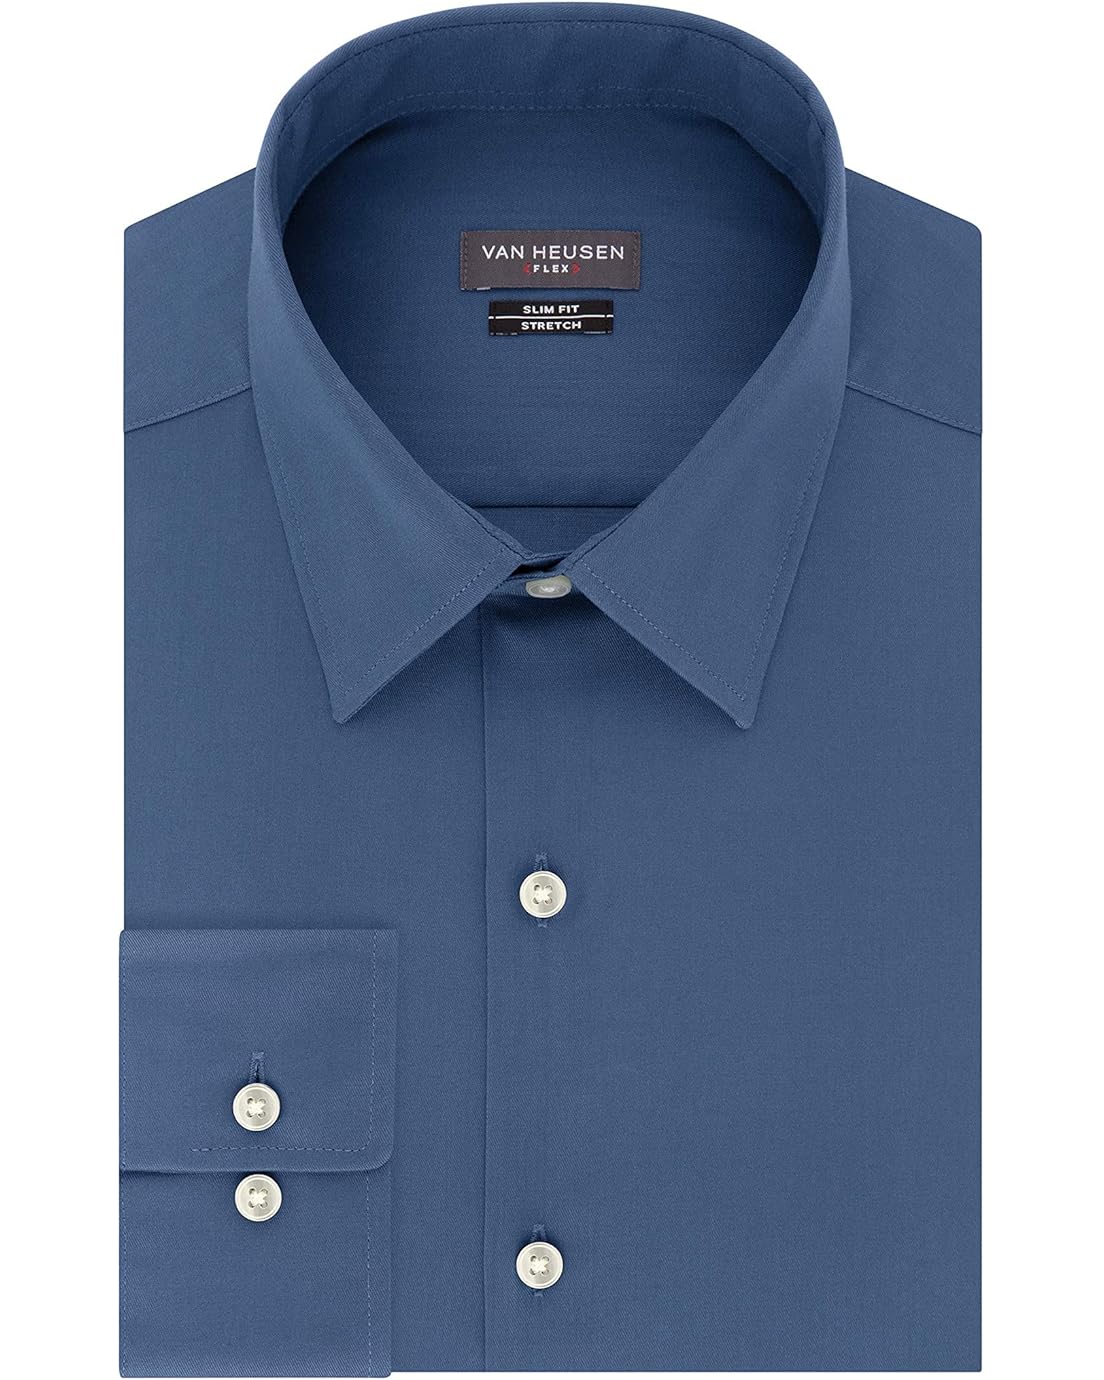 Van Heusen Mens Dress Shirt Slim Fit Flex Collar Stretch Solid